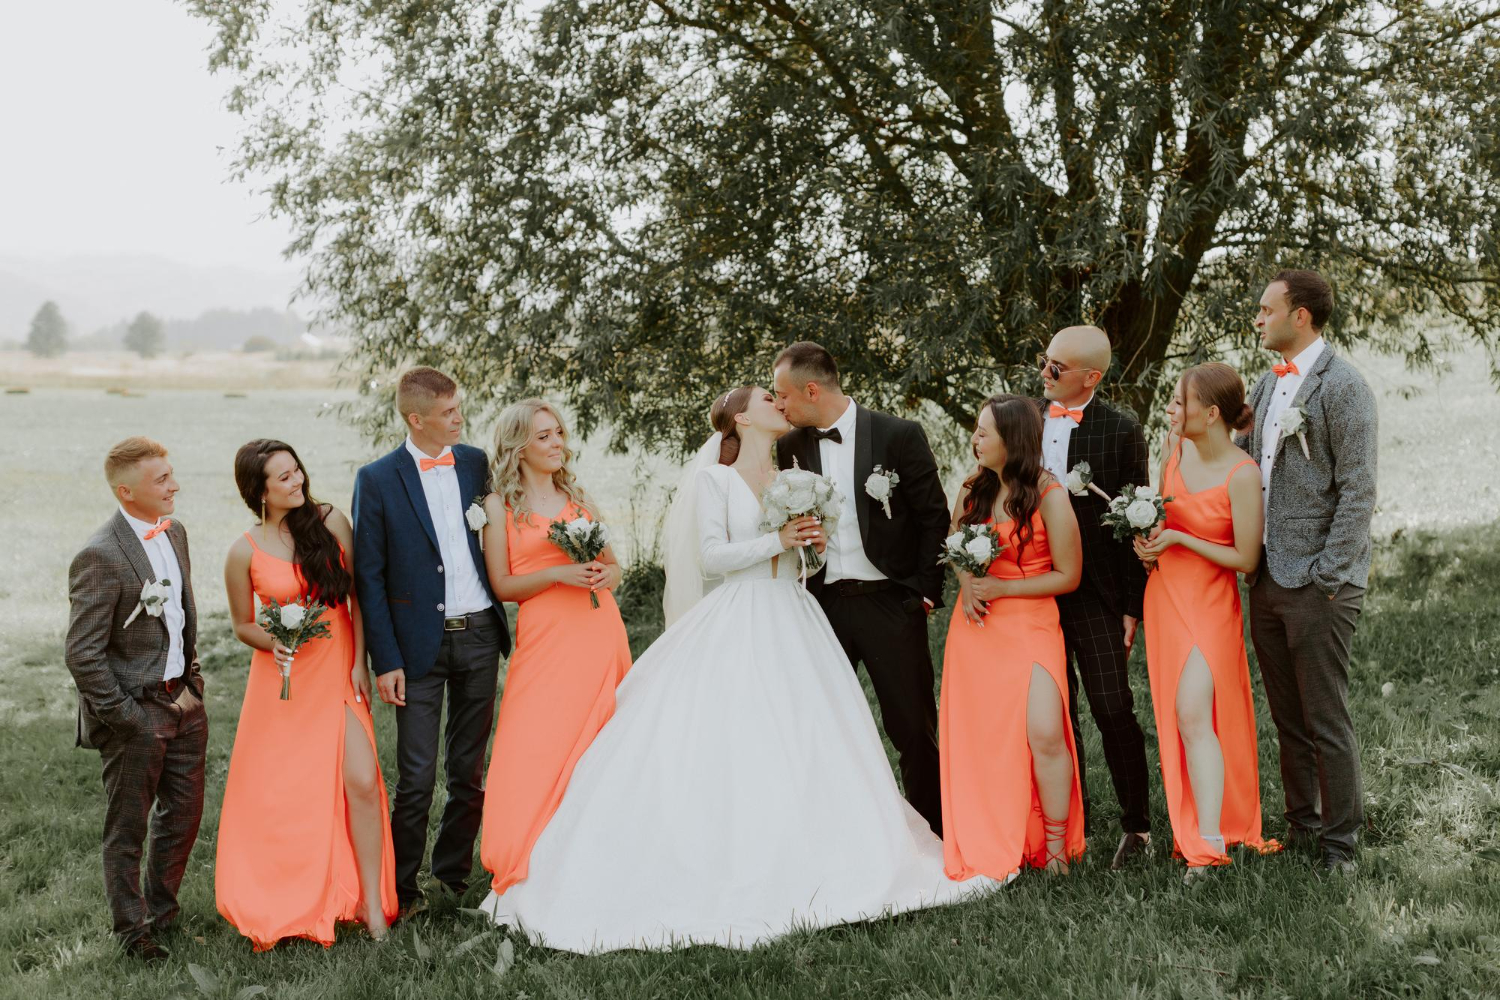 Wedding party with orange bridesmaid dresses